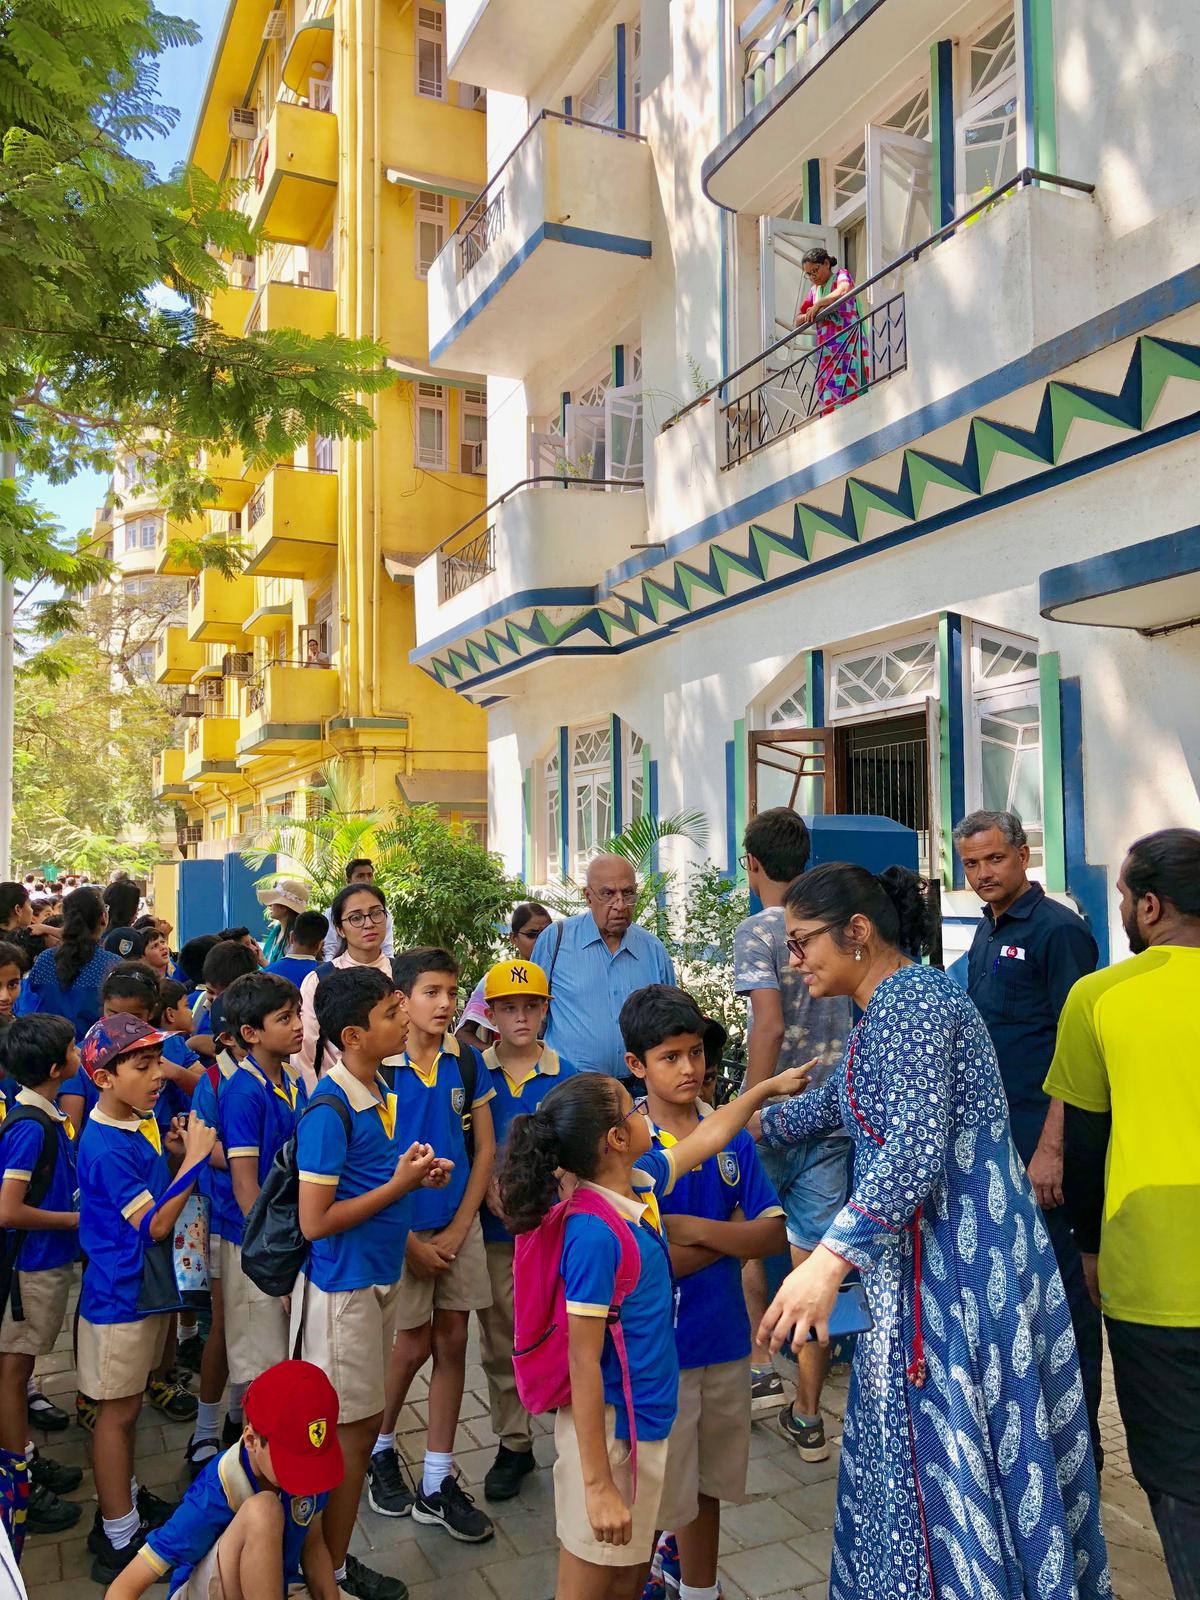 Students of Don Bosco International School, Matunga participate in an Art Deco heritage walk conducted by Art Deco Mumbai Trust